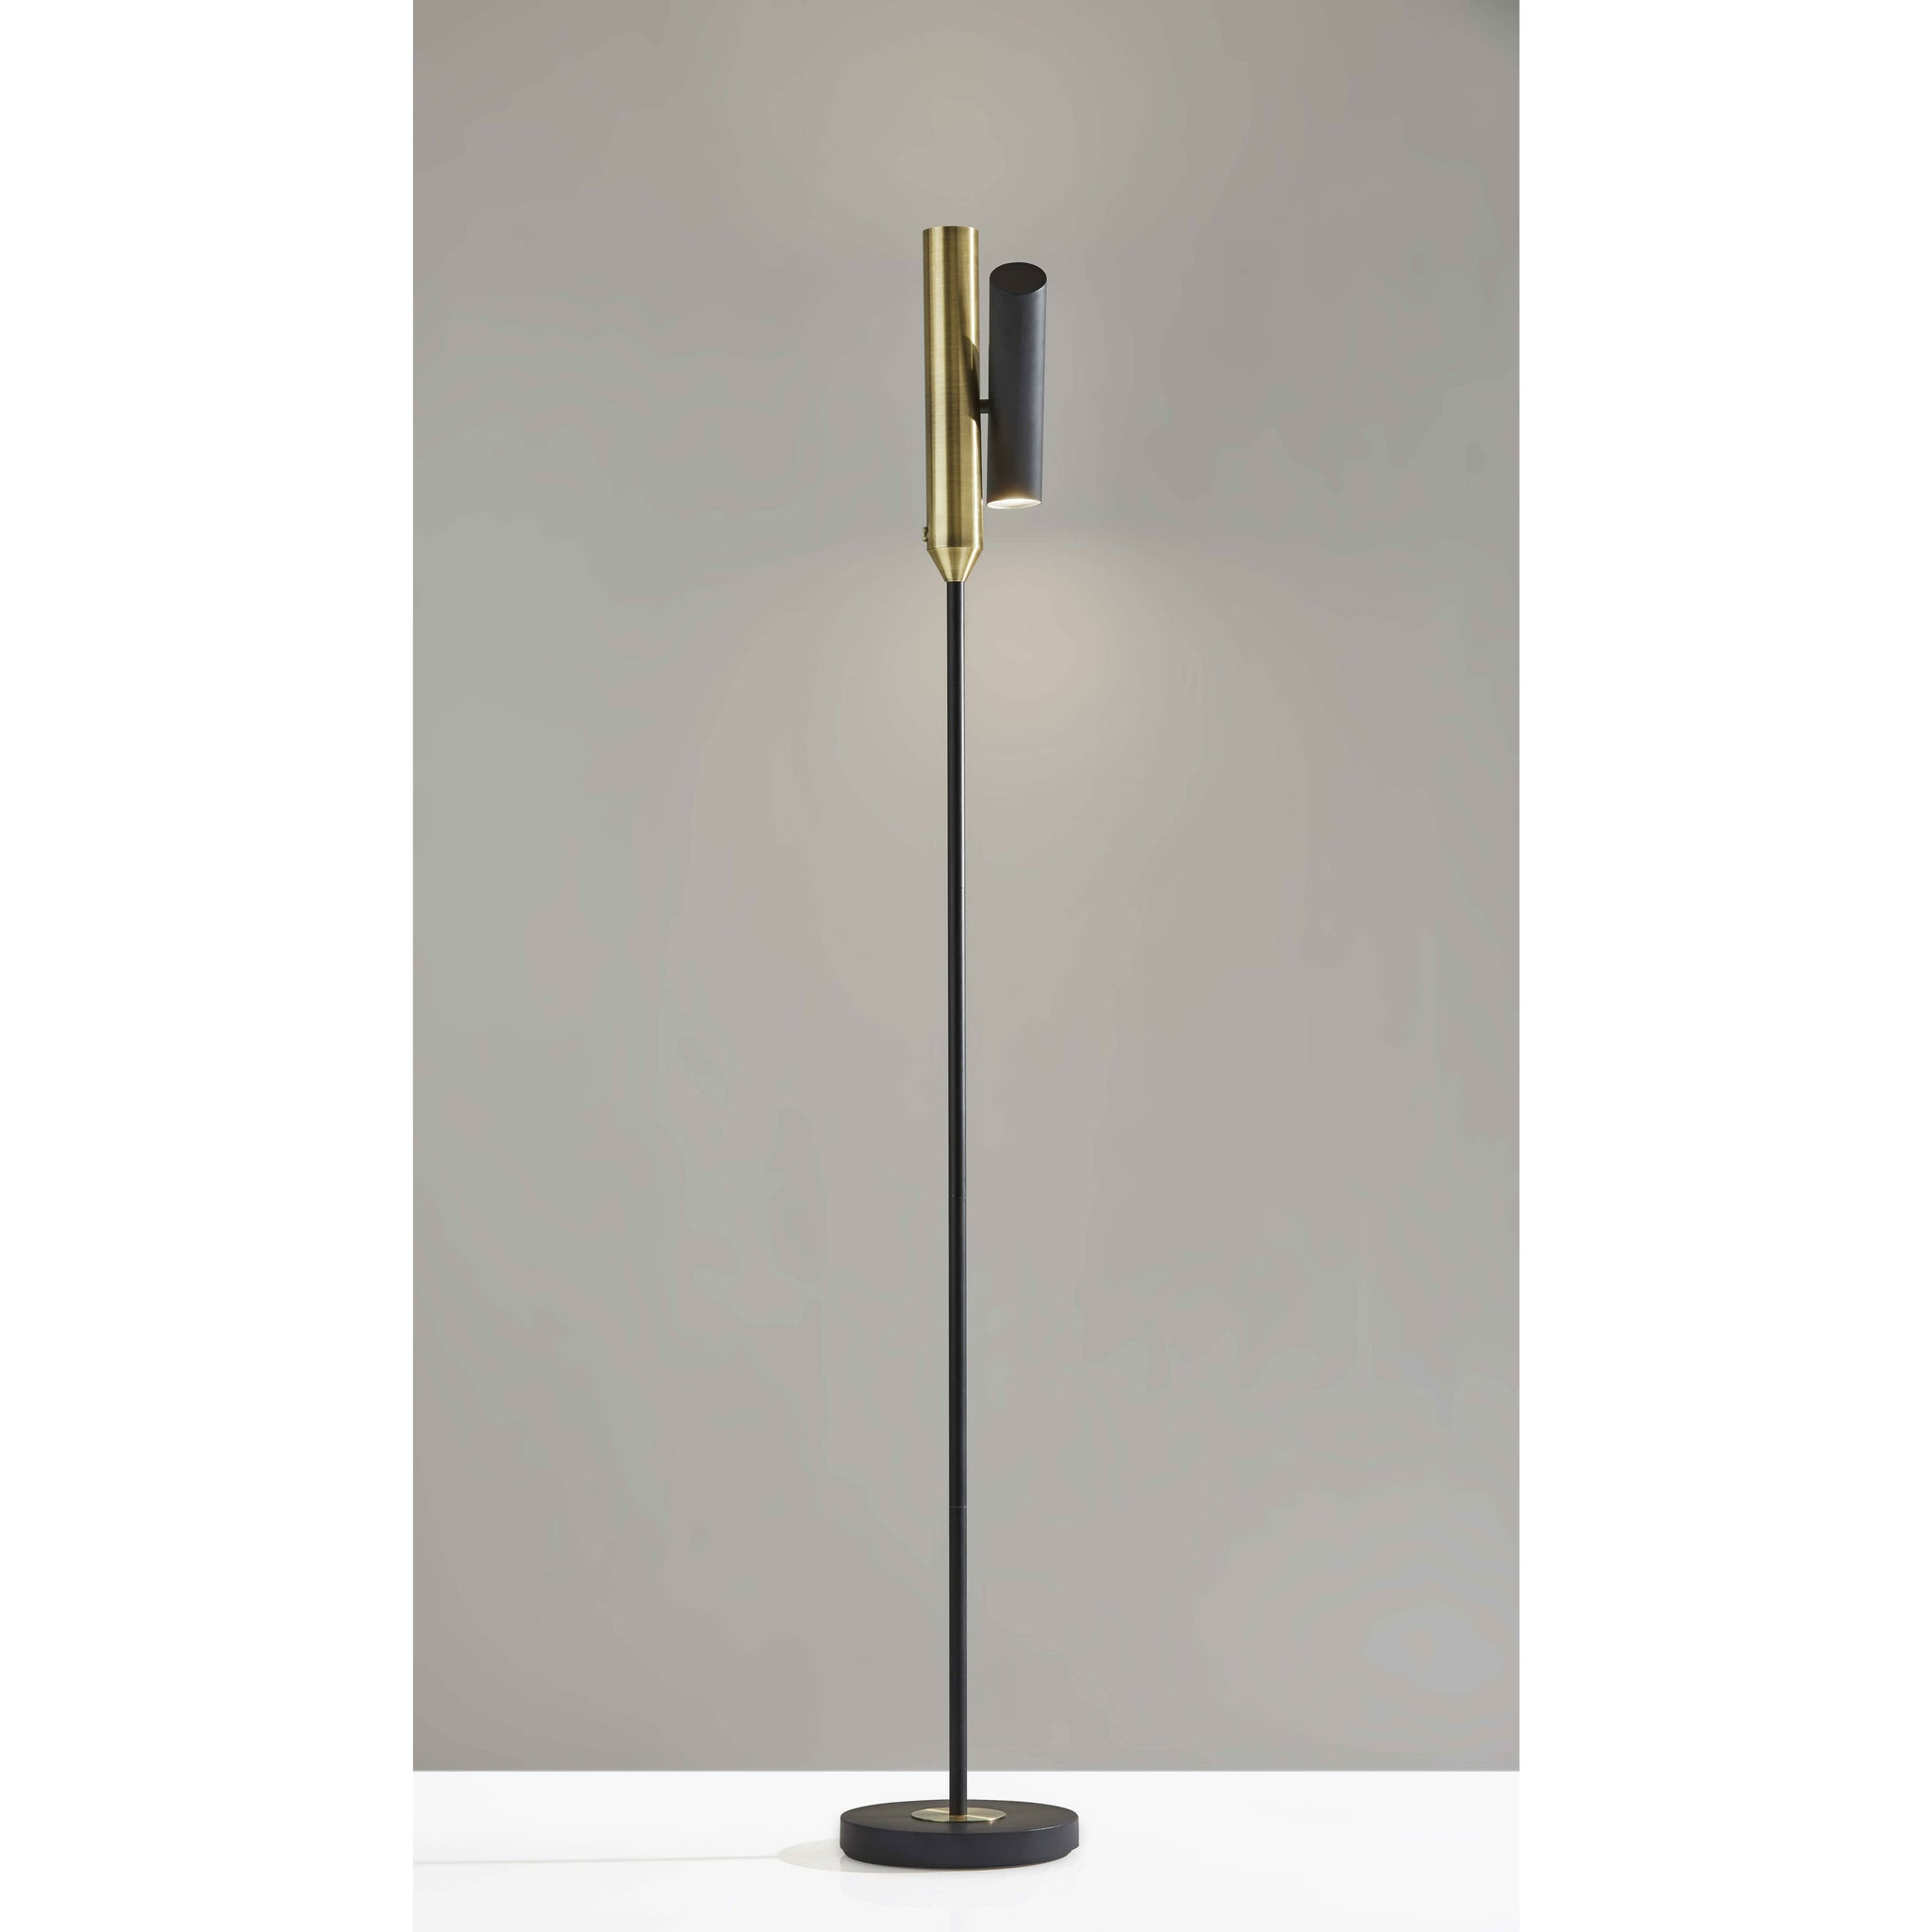 Floor Lamp Black w. Antique Brass Accents